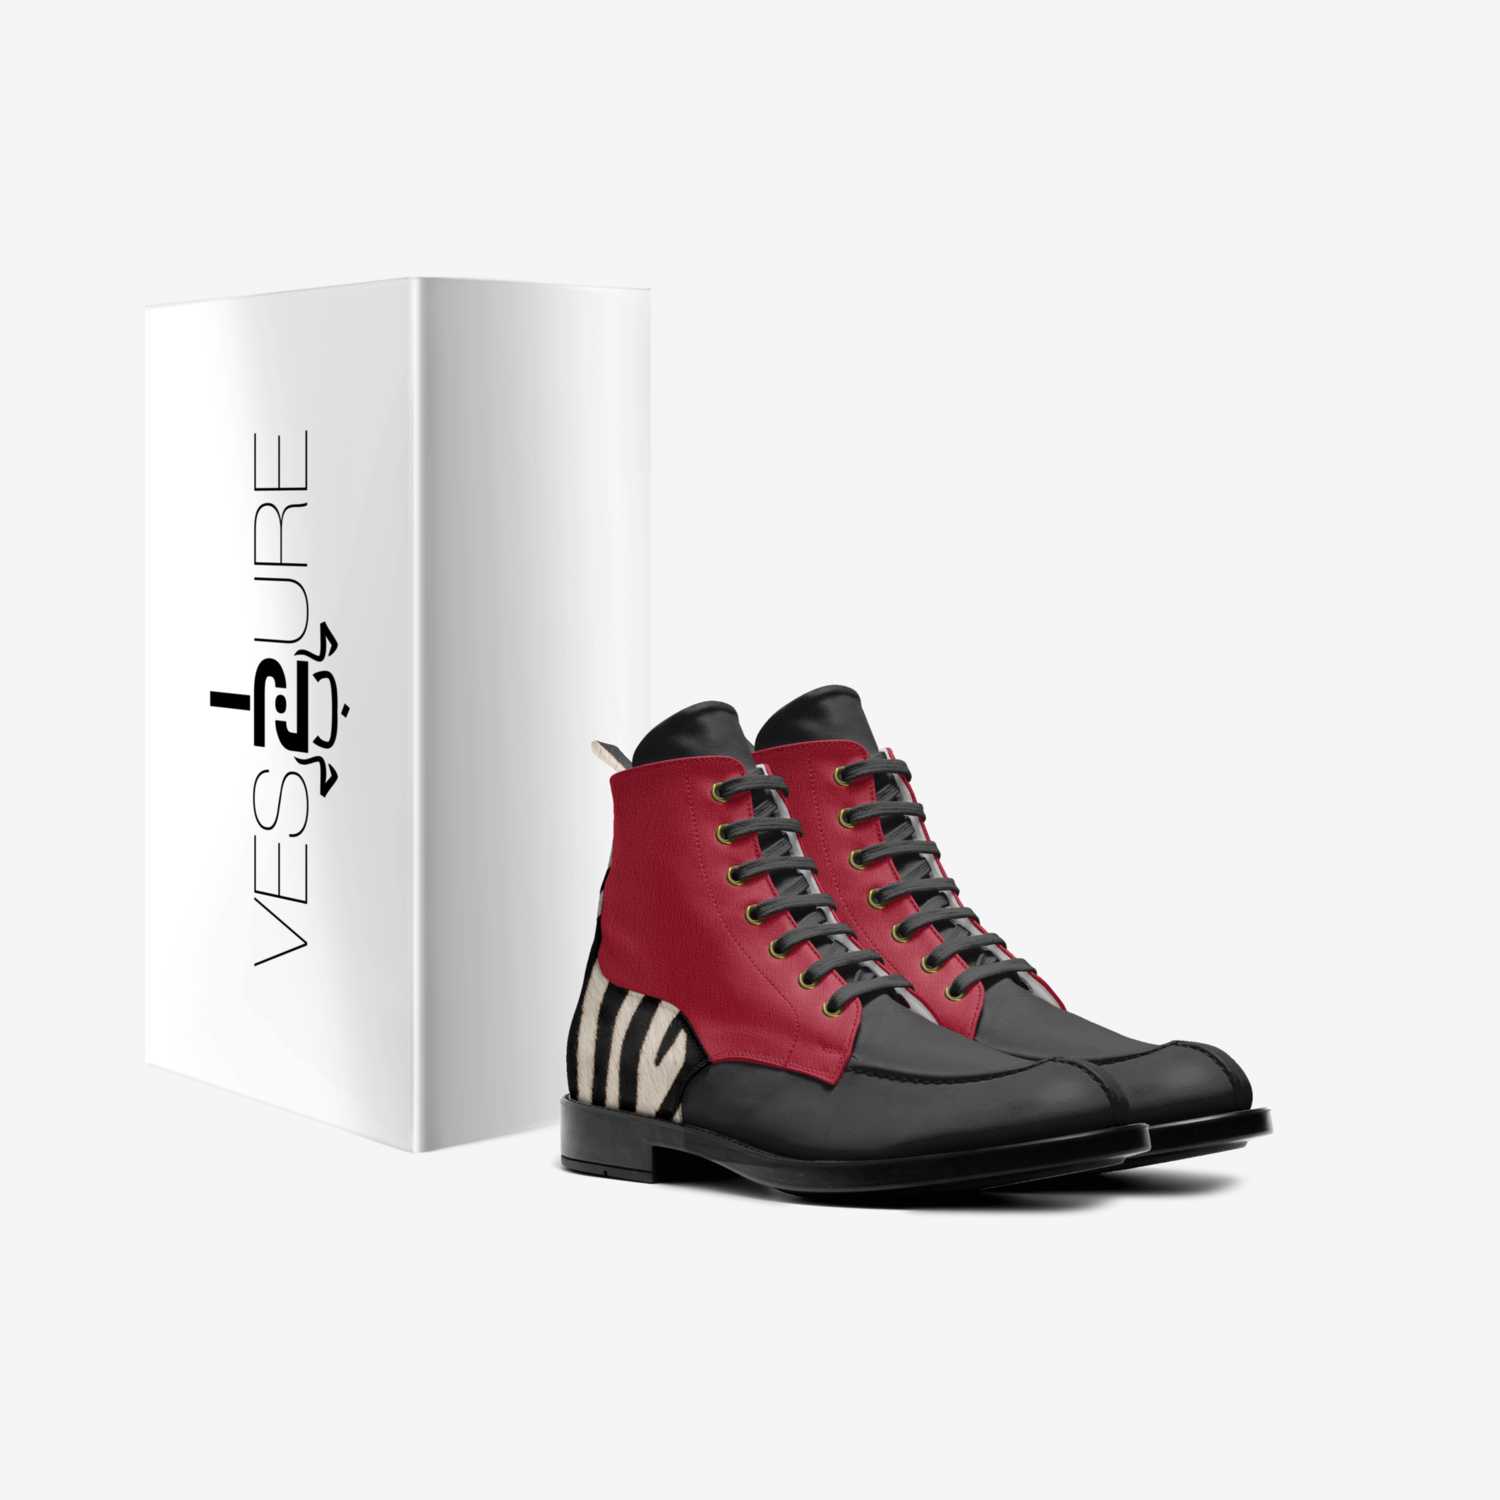 Ves2ure 2 custom made in Italy shoes by Jordan Warren Jr | Box view